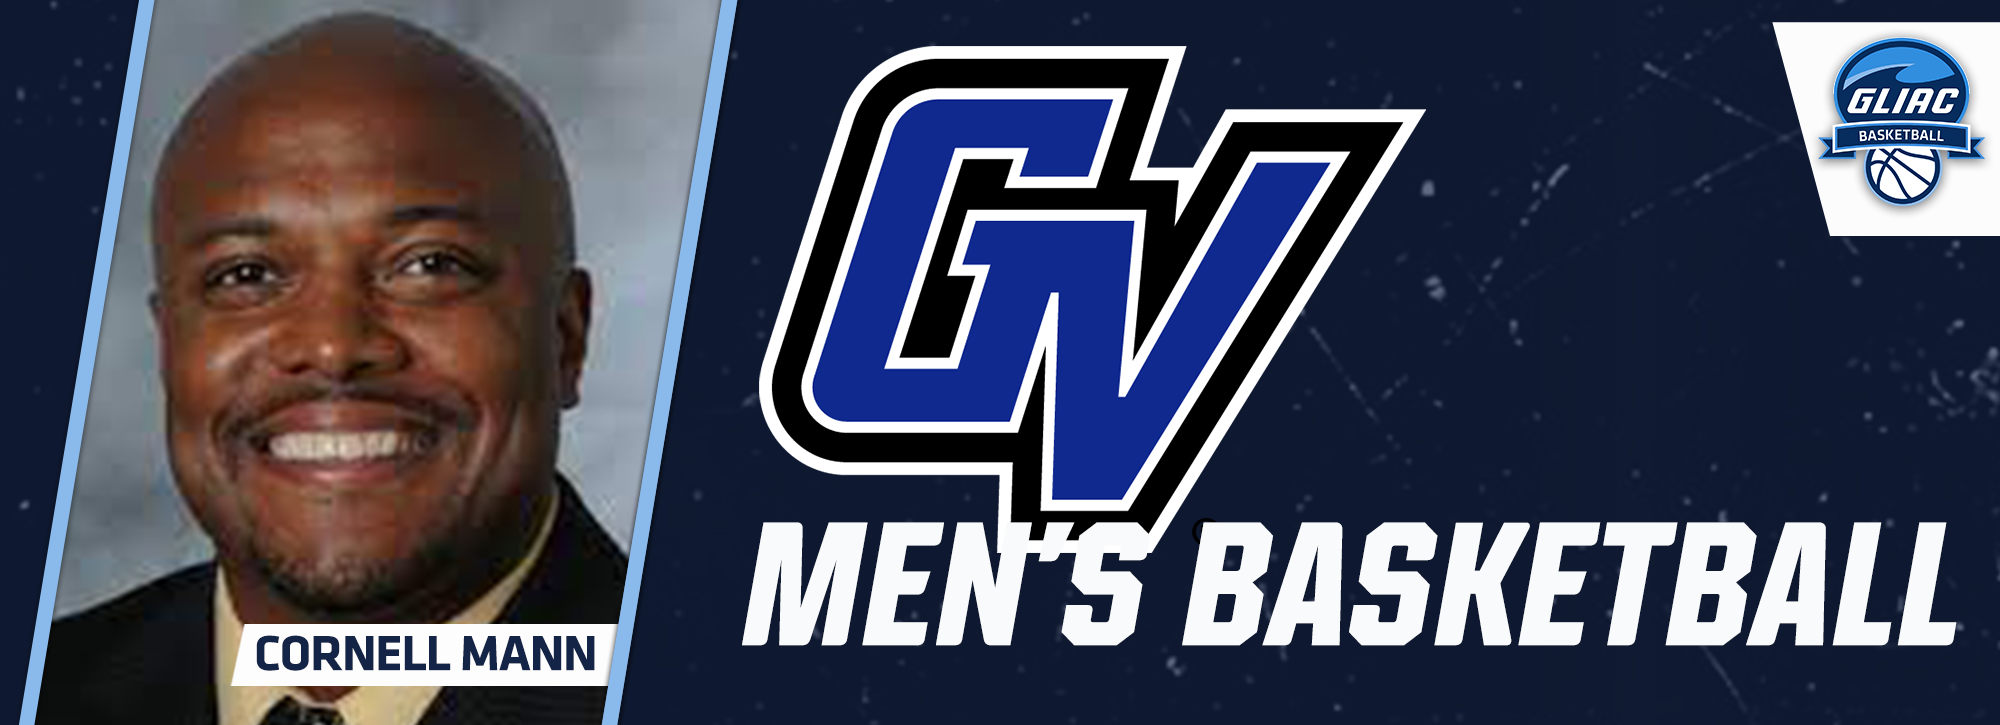 GVSU names Cornell Mann as men's basketball head coach